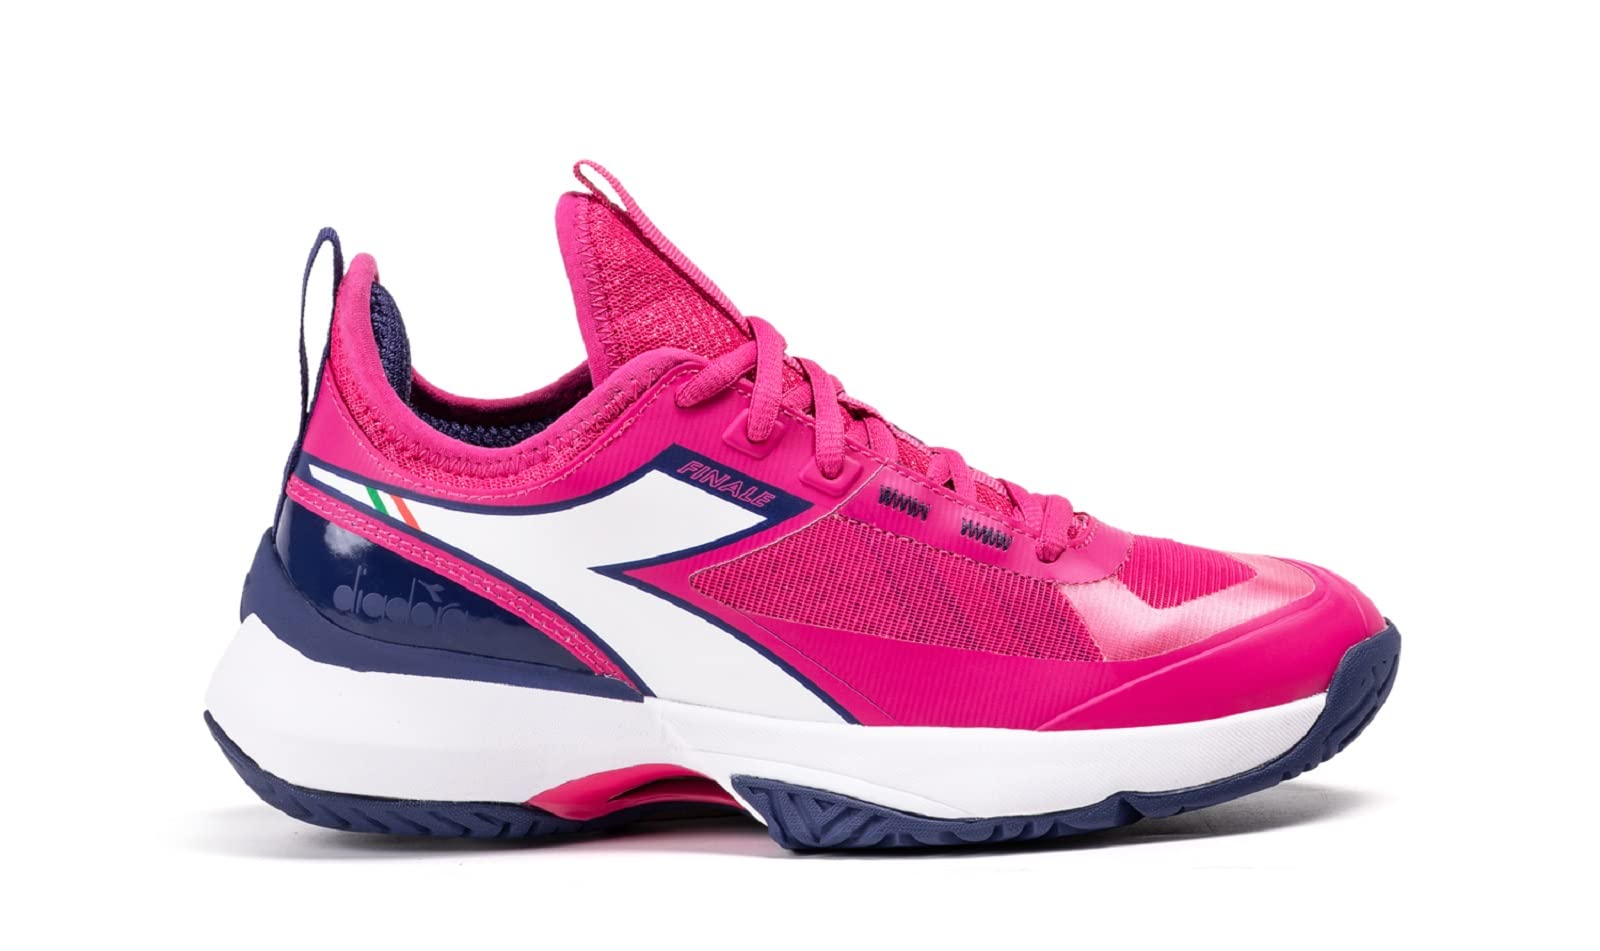 Diadora Women's Finale All Ground Tennis Shoe (Pink Yarrow/White/Blueprint, 7.5)